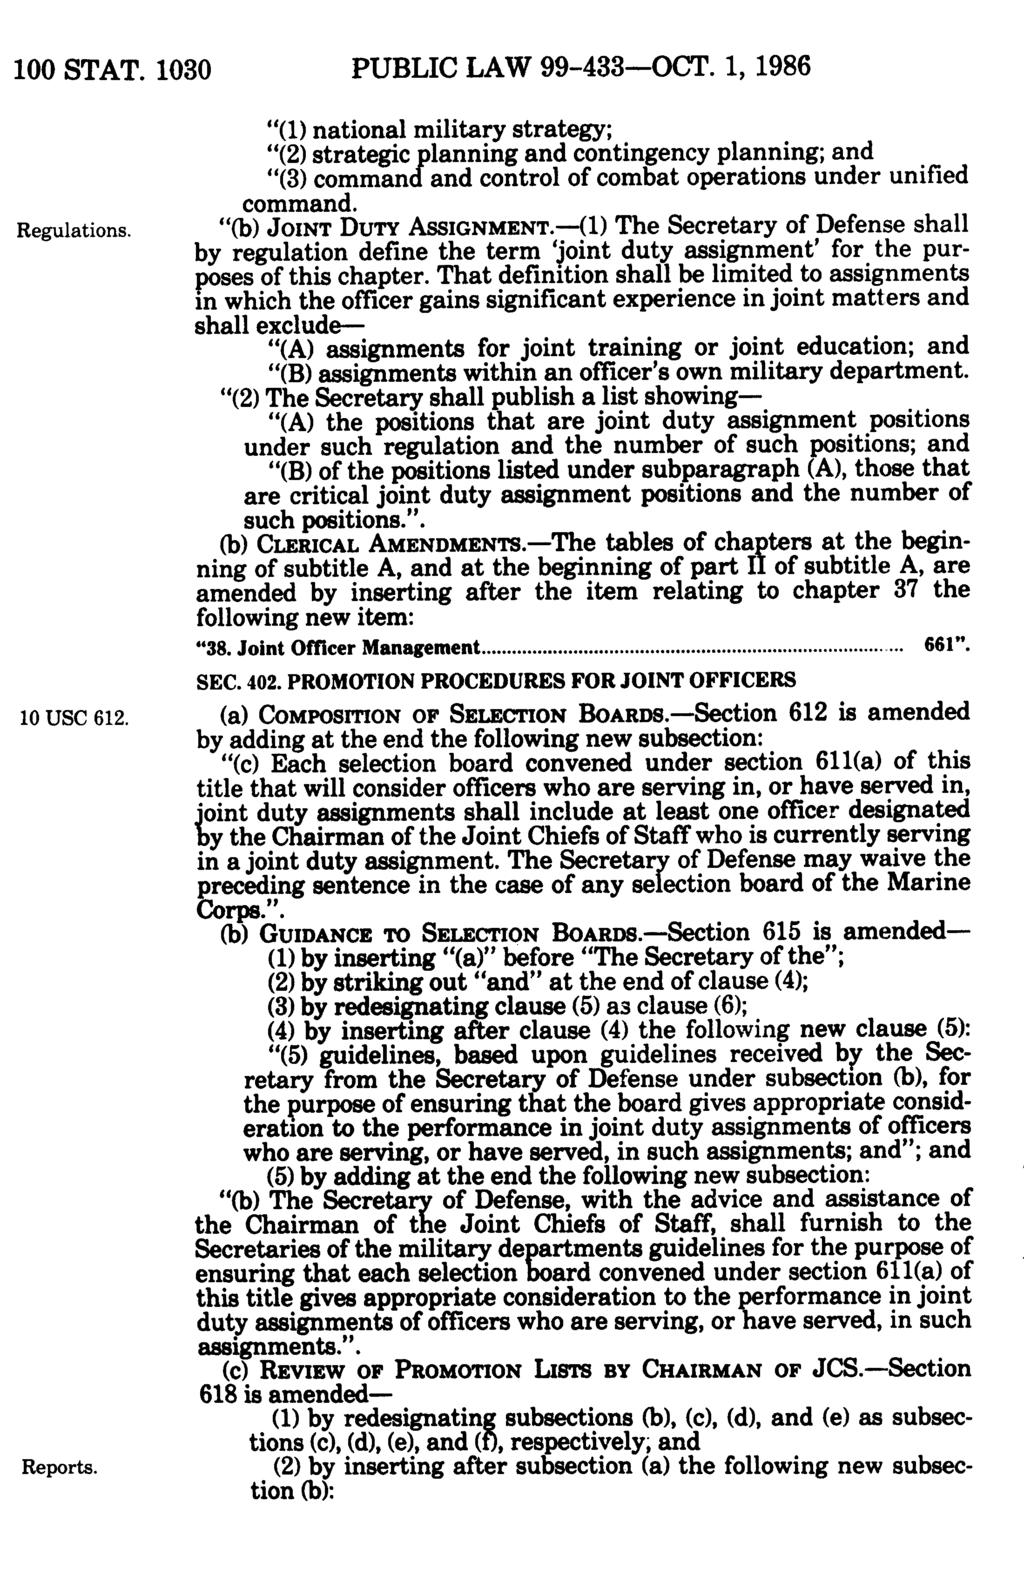 100 STAT. 1030 PUBLIC LAW 99-433-OCT. 1986 1, Regulations.